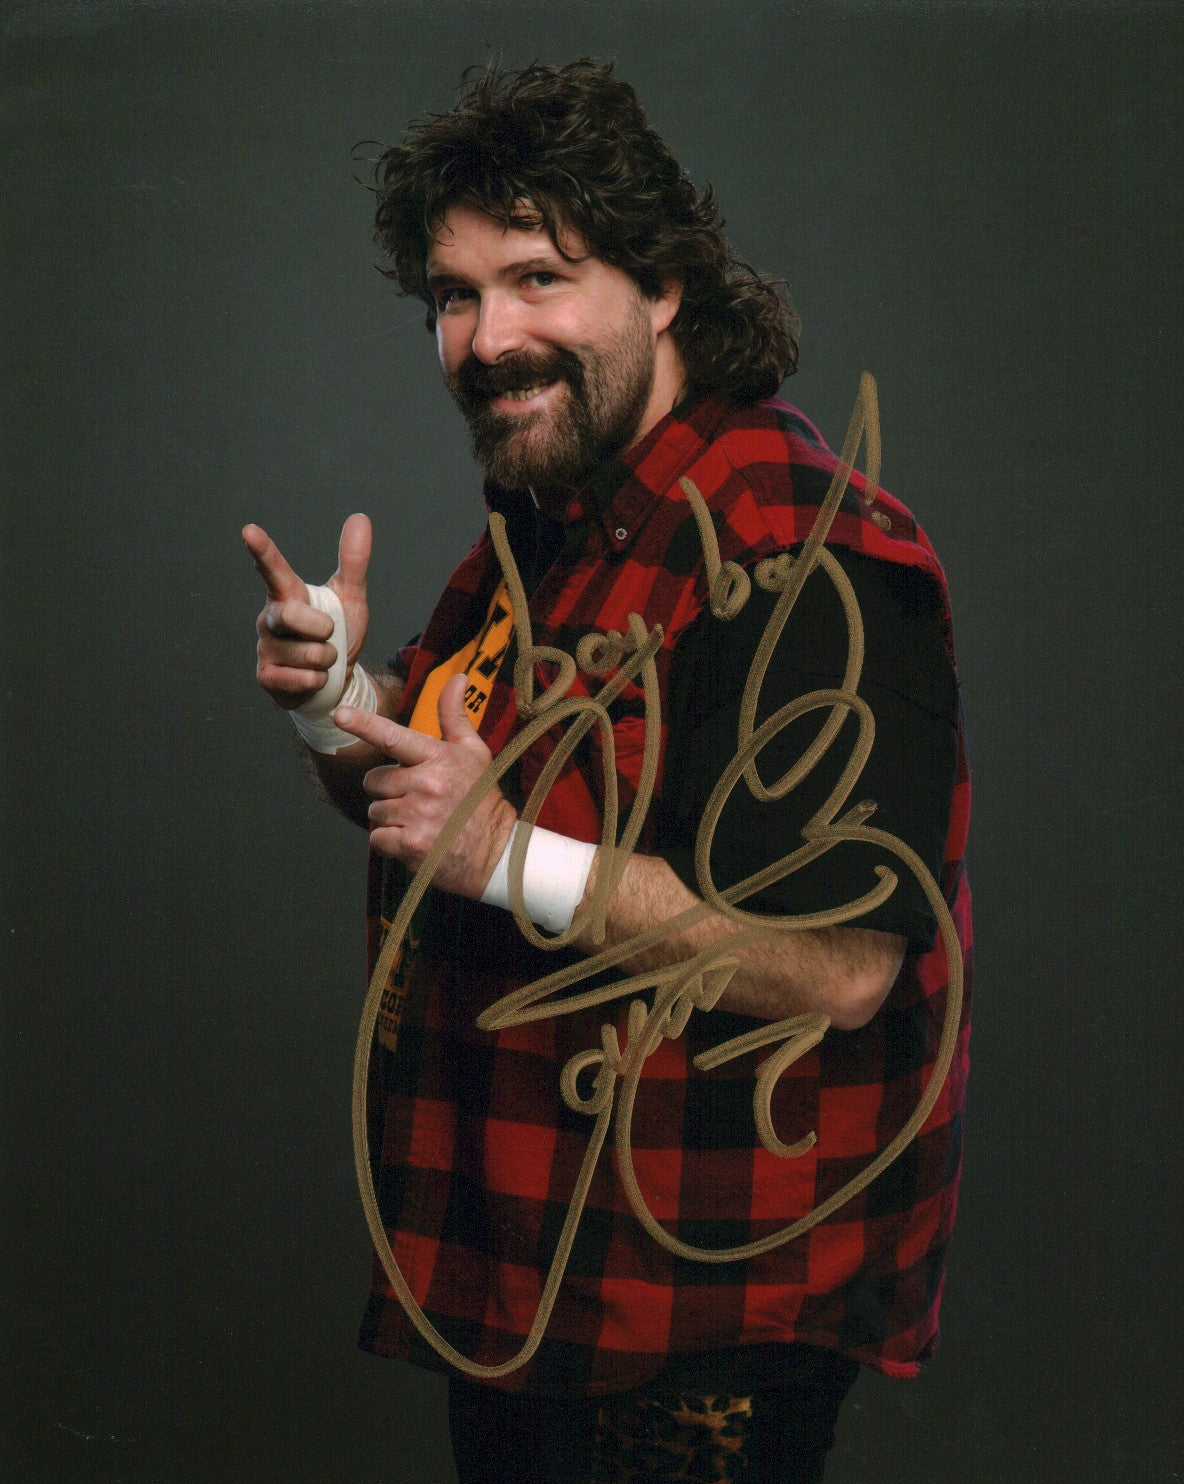 Mick Foley WWE Wrestling 8x10 Signed Photo JSA COA Certified Autograph GalaxyCon